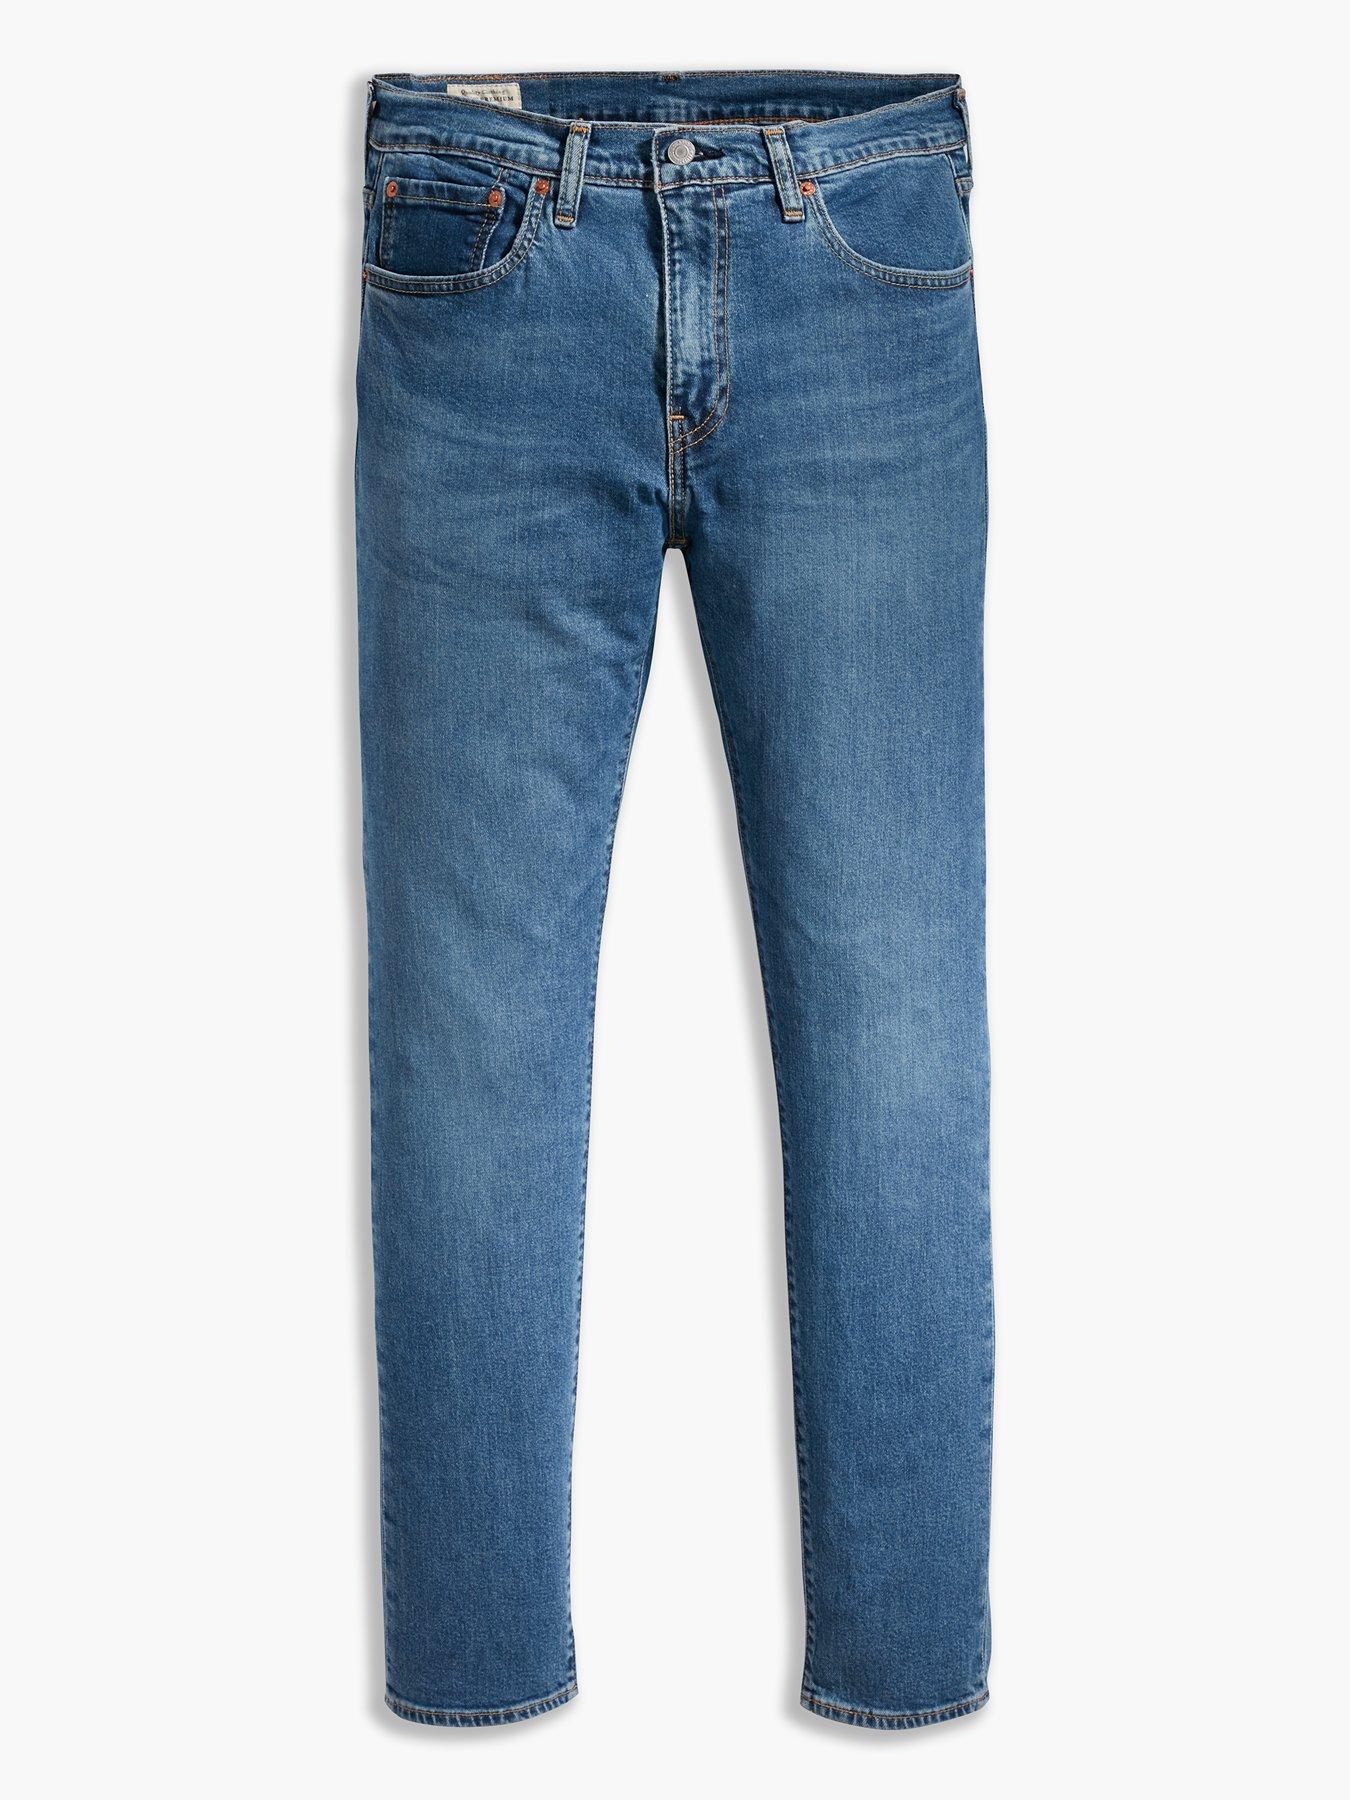 levis jeans ireland